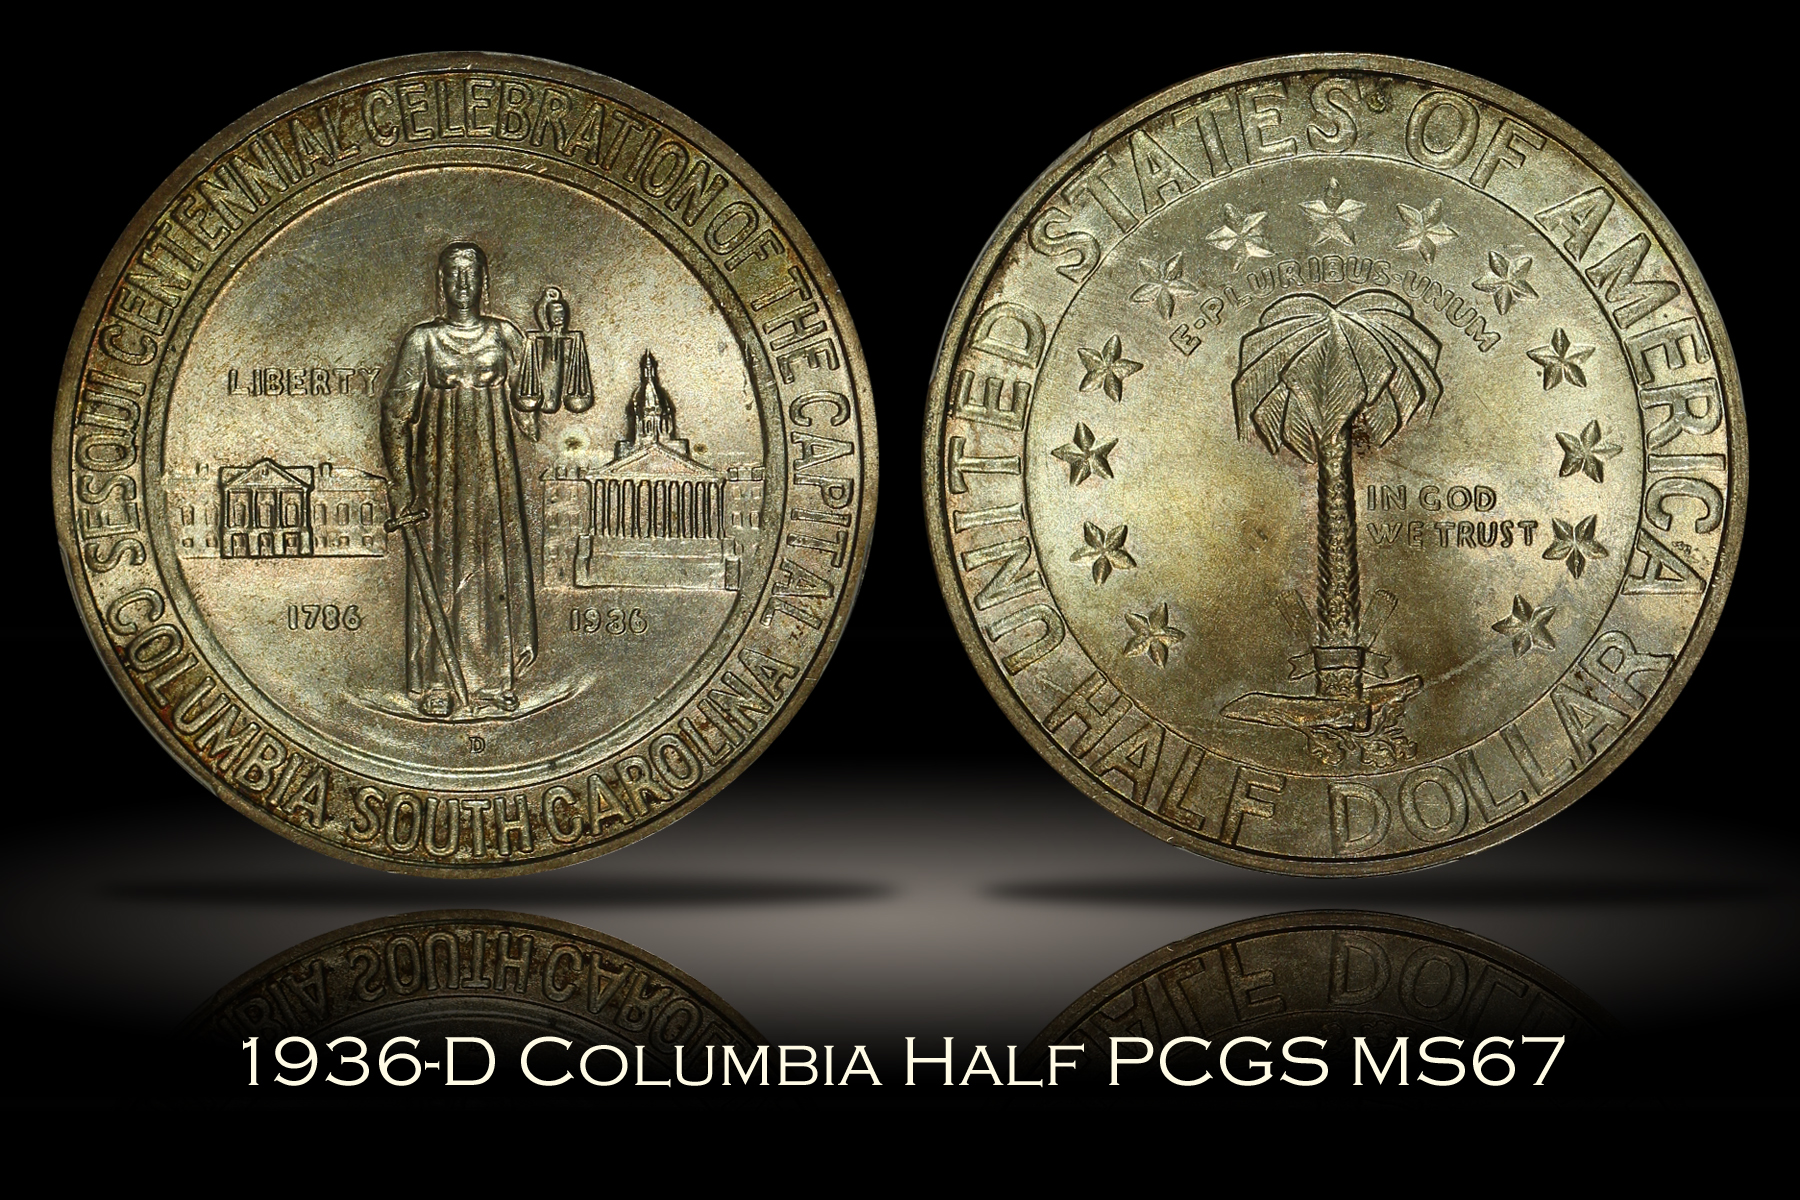 1936-D Columbia Half PCGS MS67